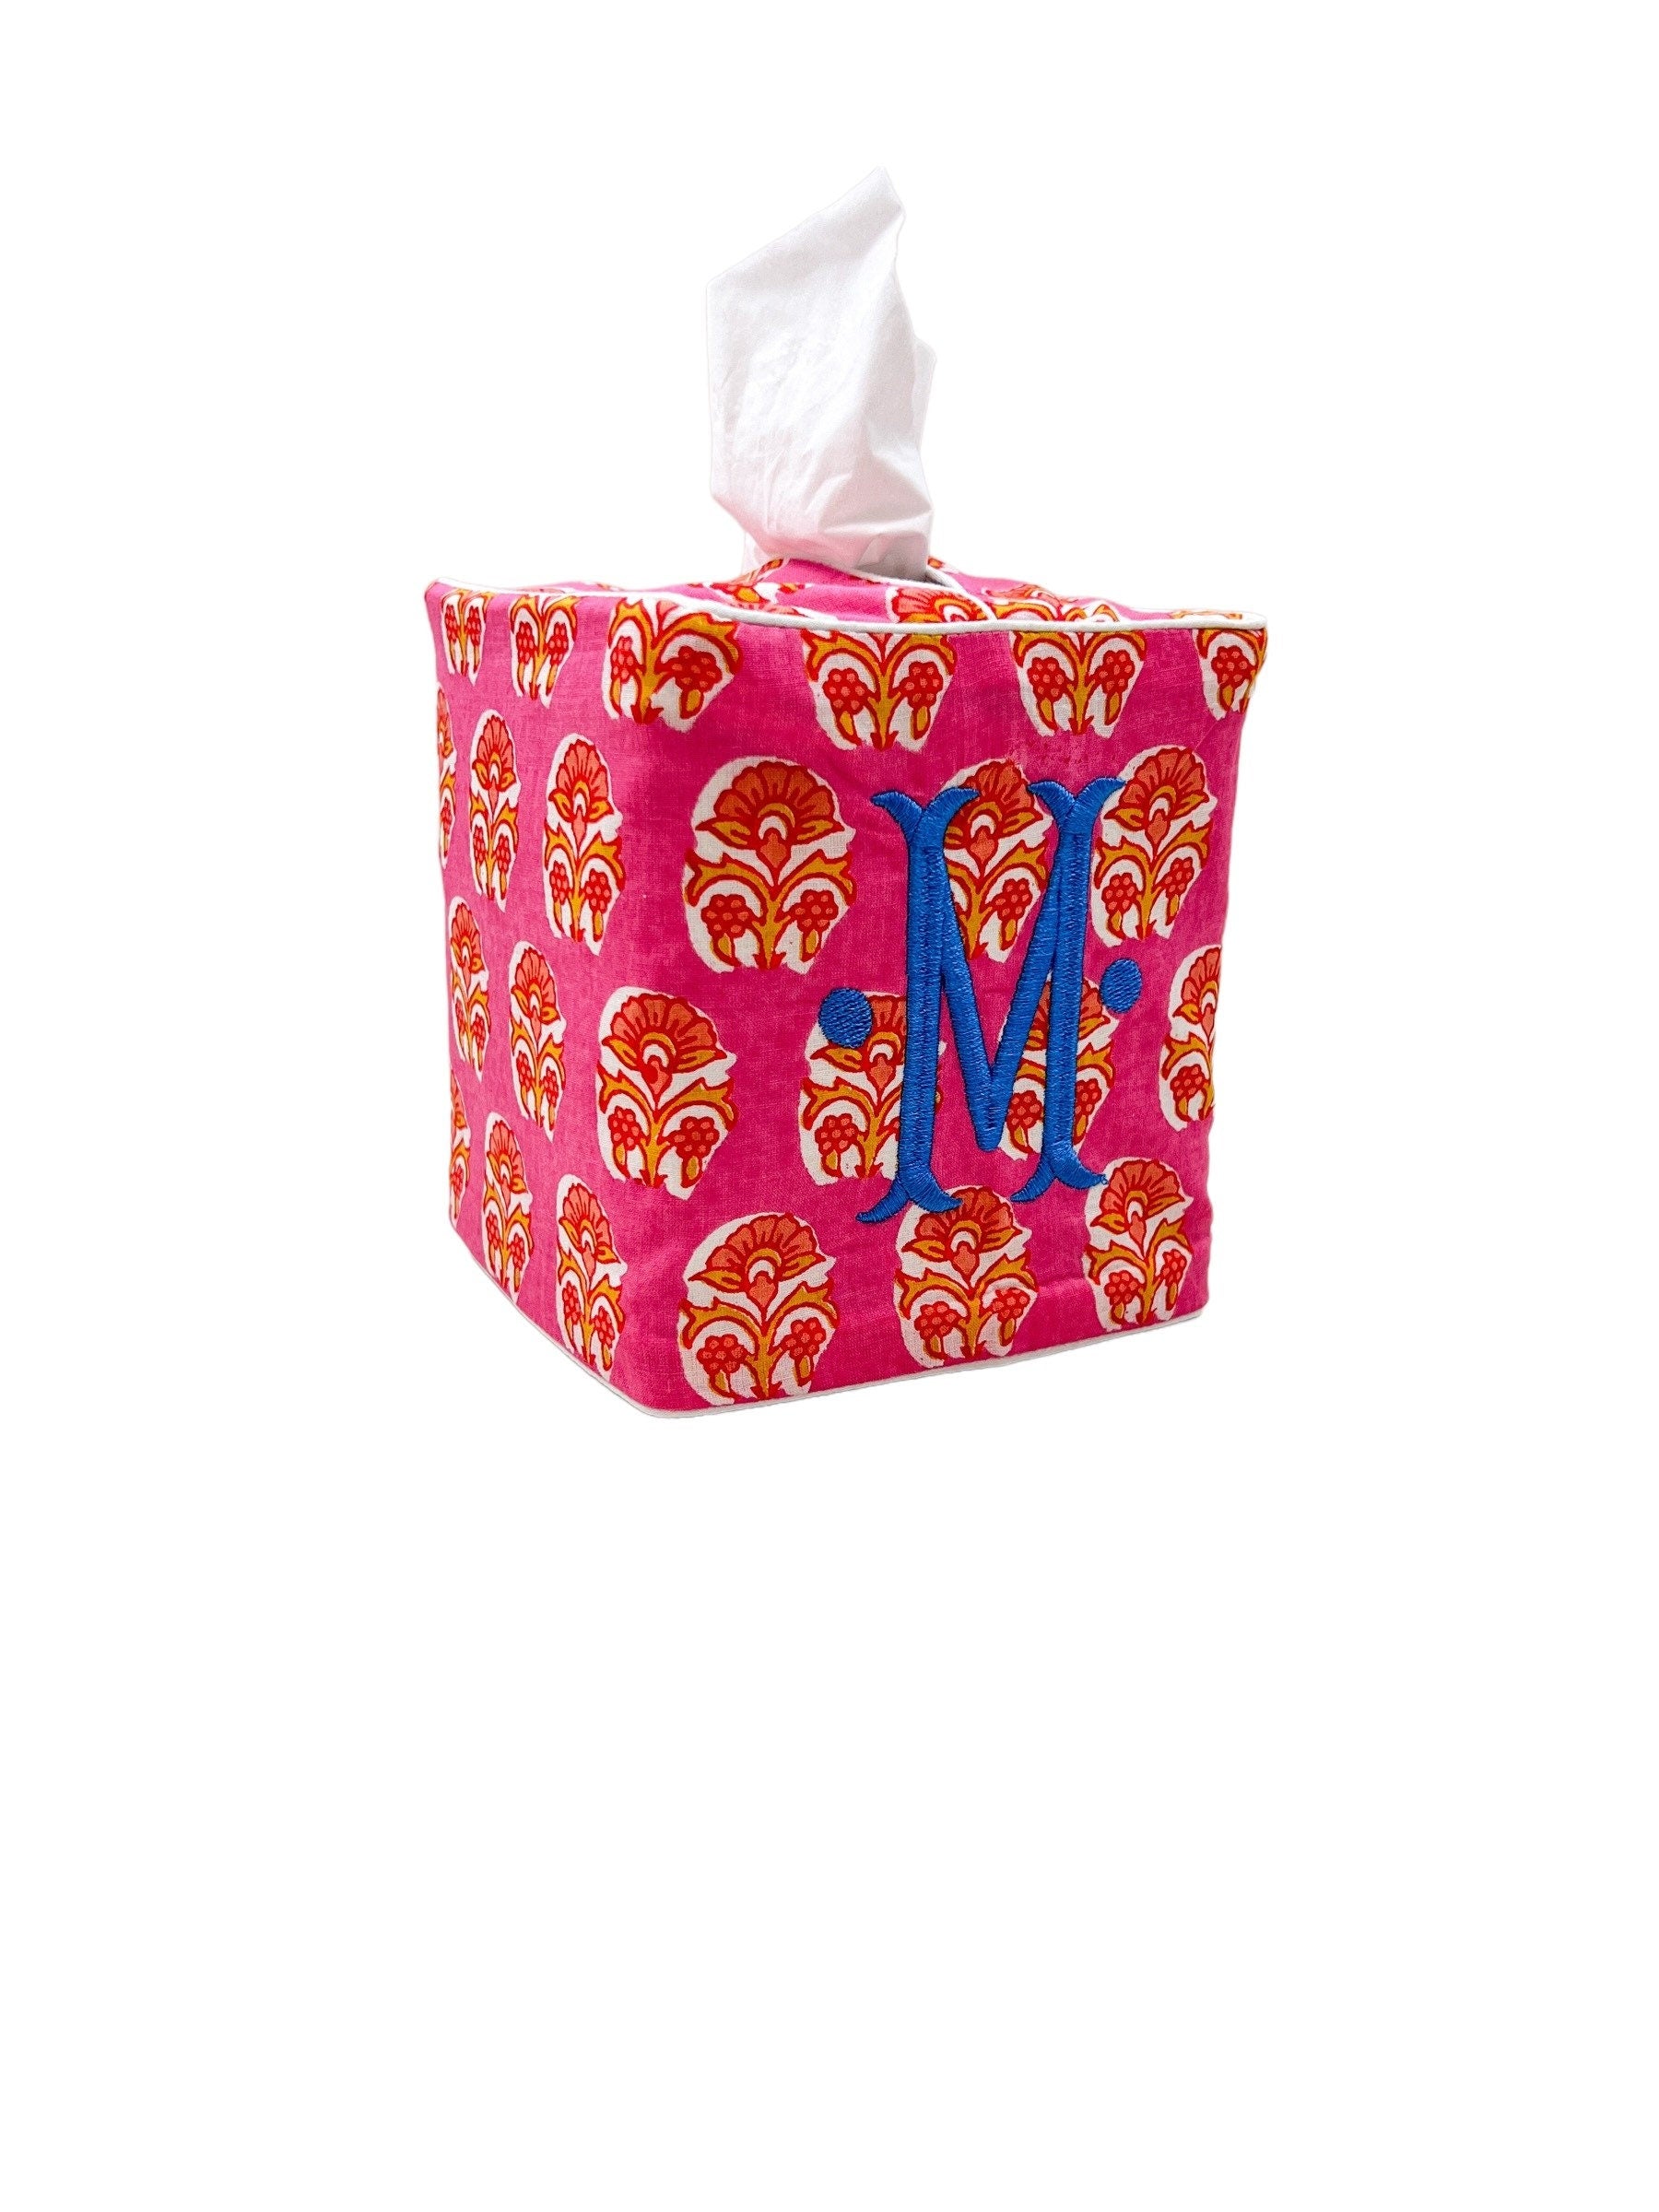 Pink block print tissue cover custom monogram available